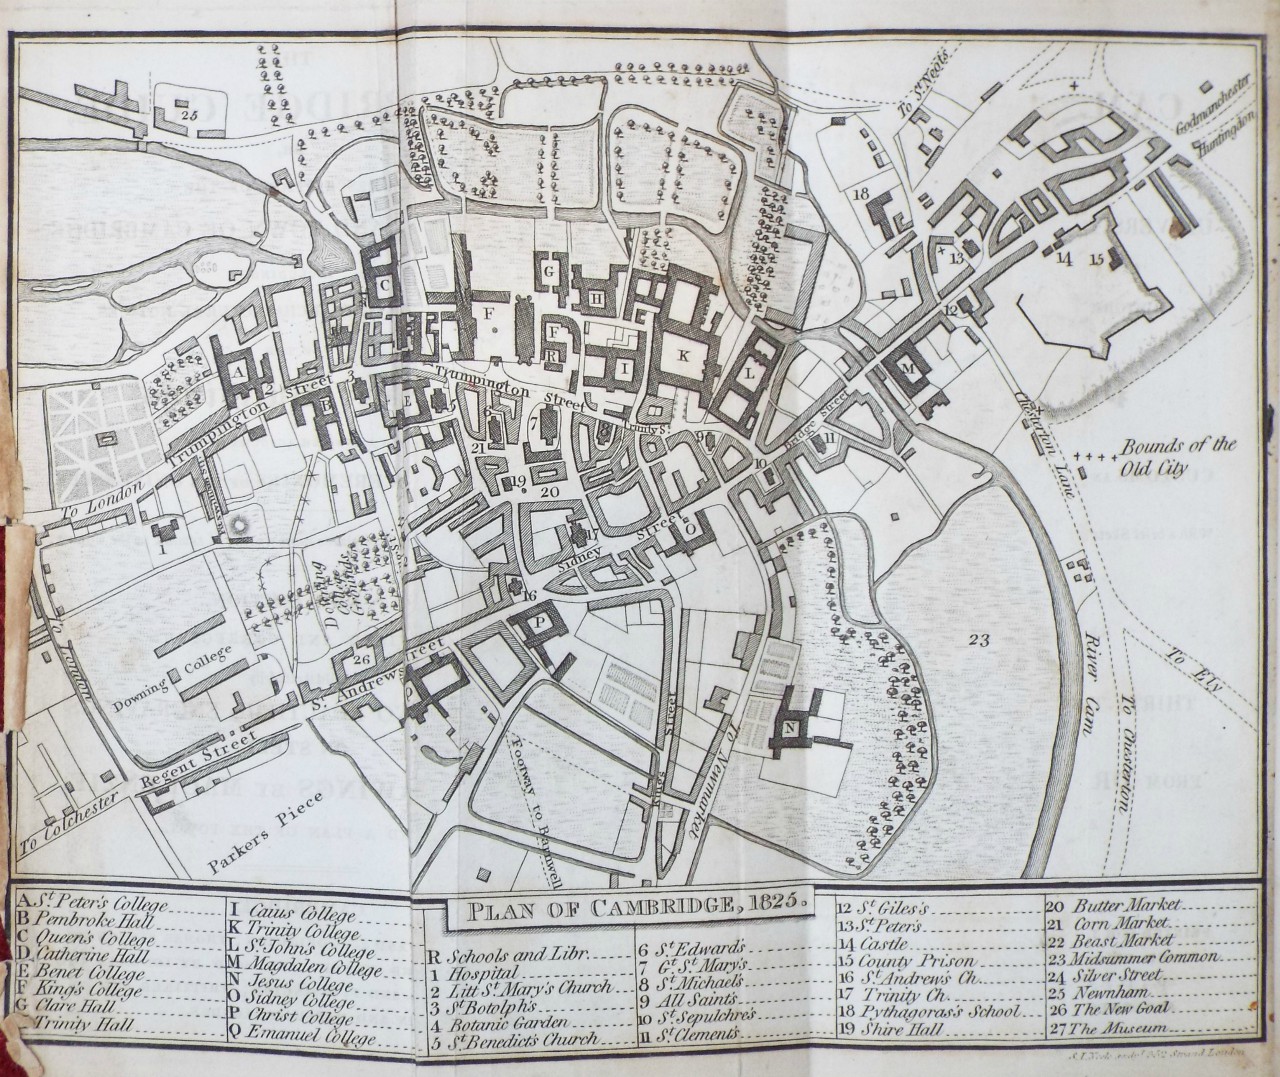 Map of Cambridge - Cambridge